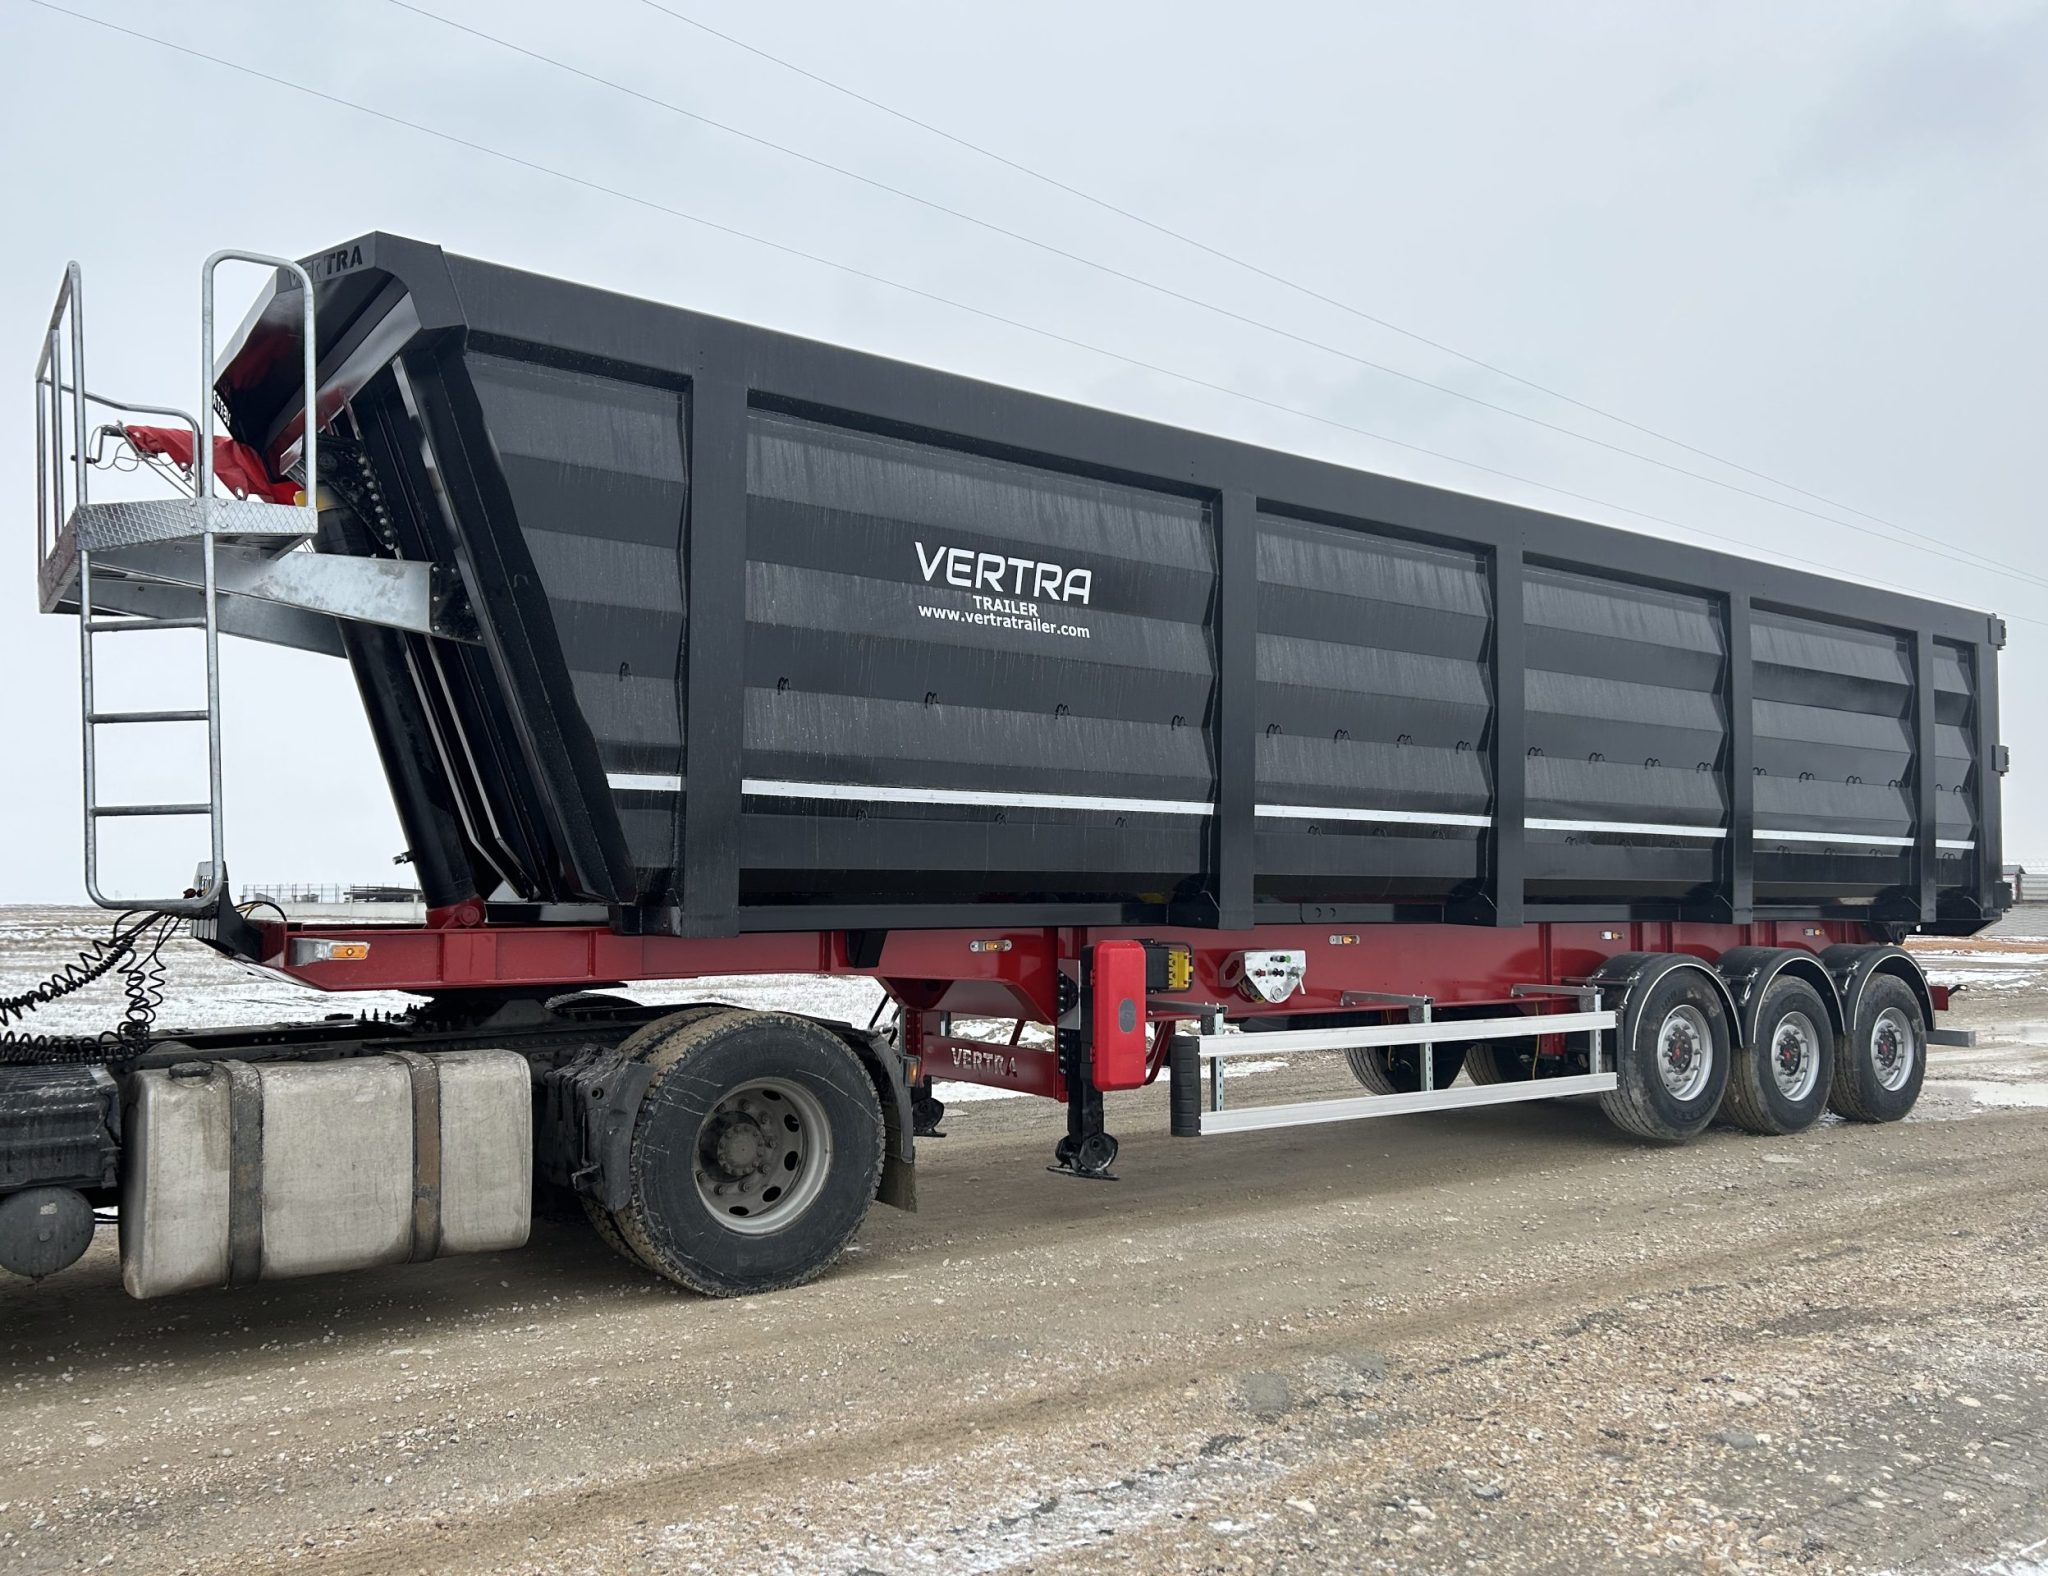 64cbm-vertra-scrap-semi-trailer-turkey-recycling-metal-waste